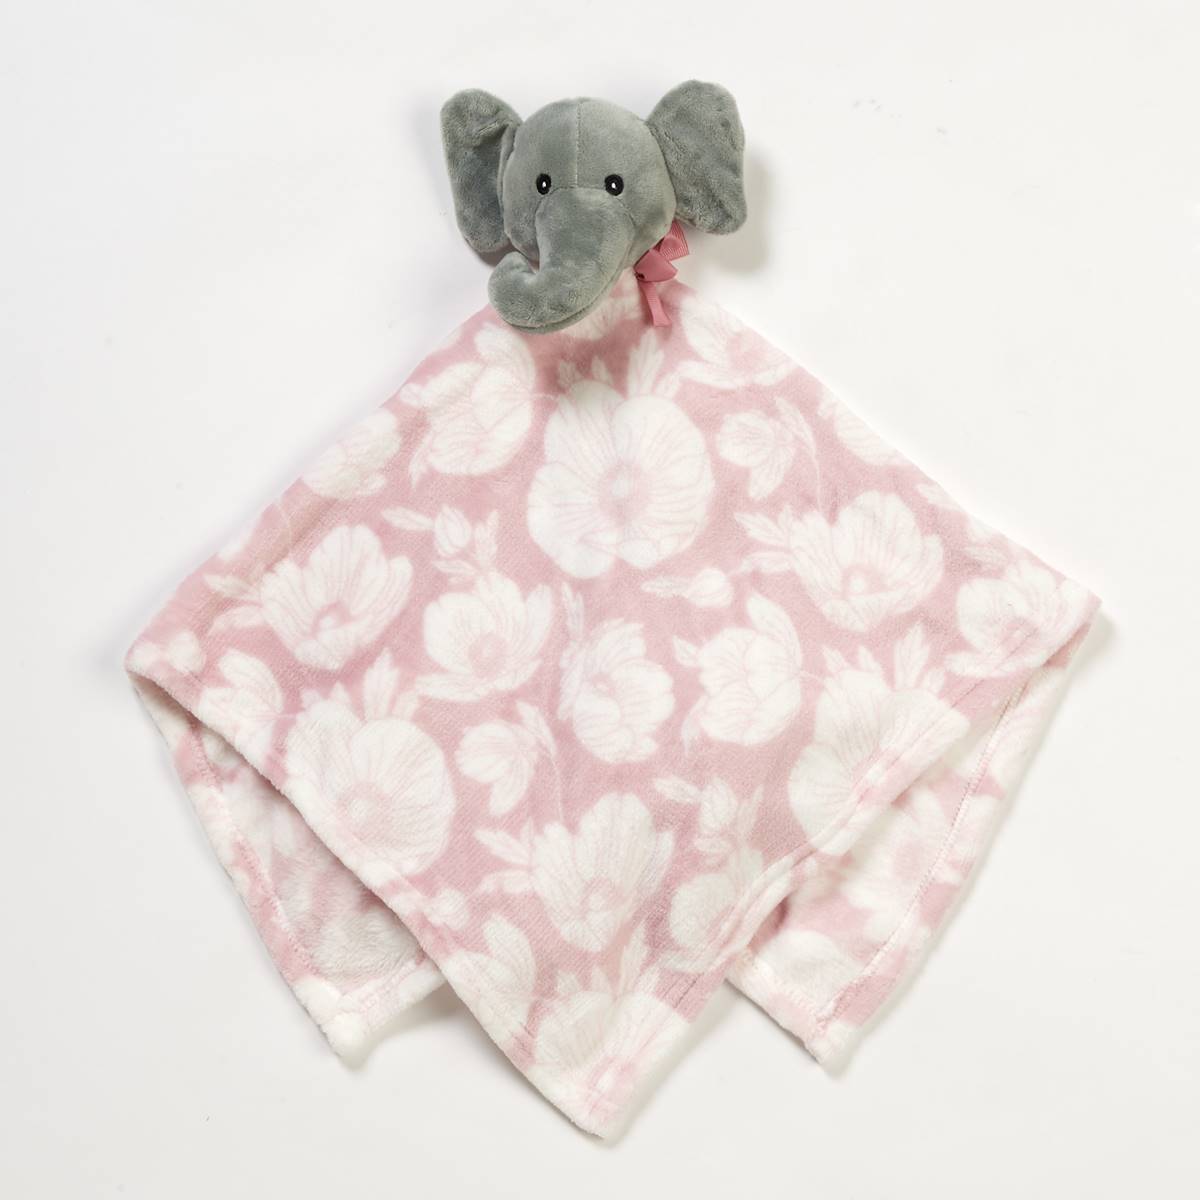 Lila & Jack Elephant Floral Lovey Blanket